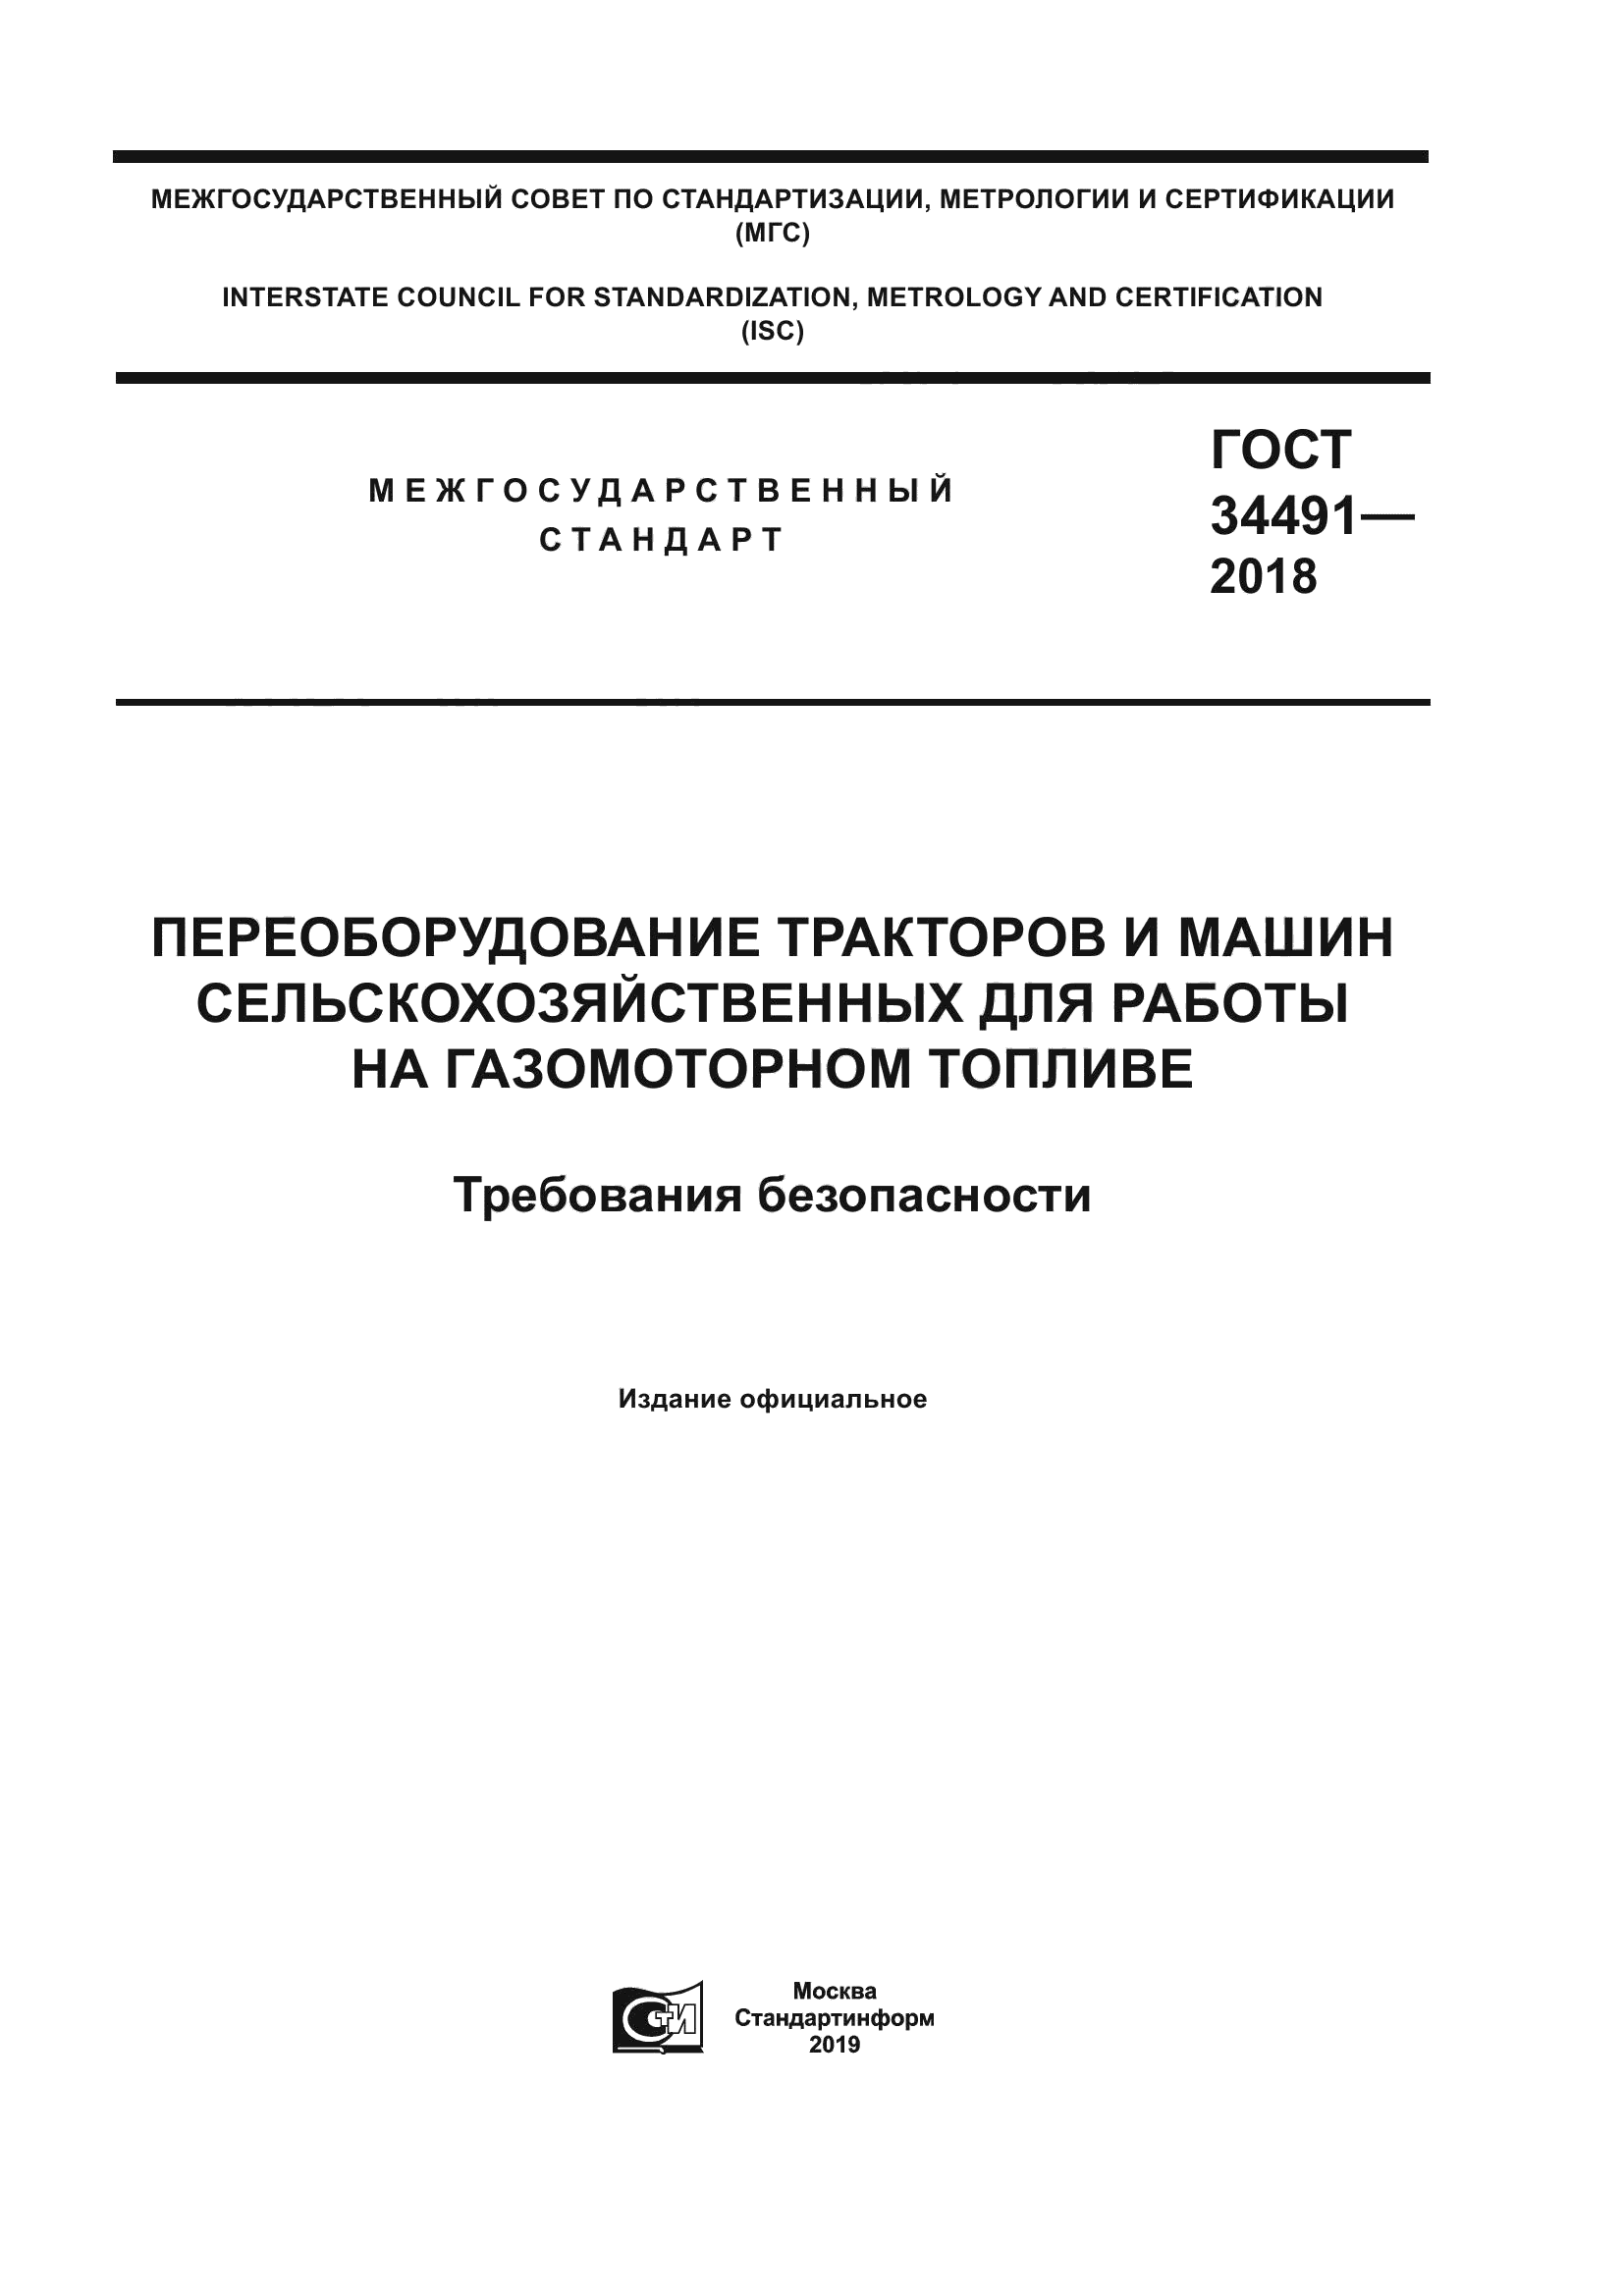 ГОСТ 34491-2018